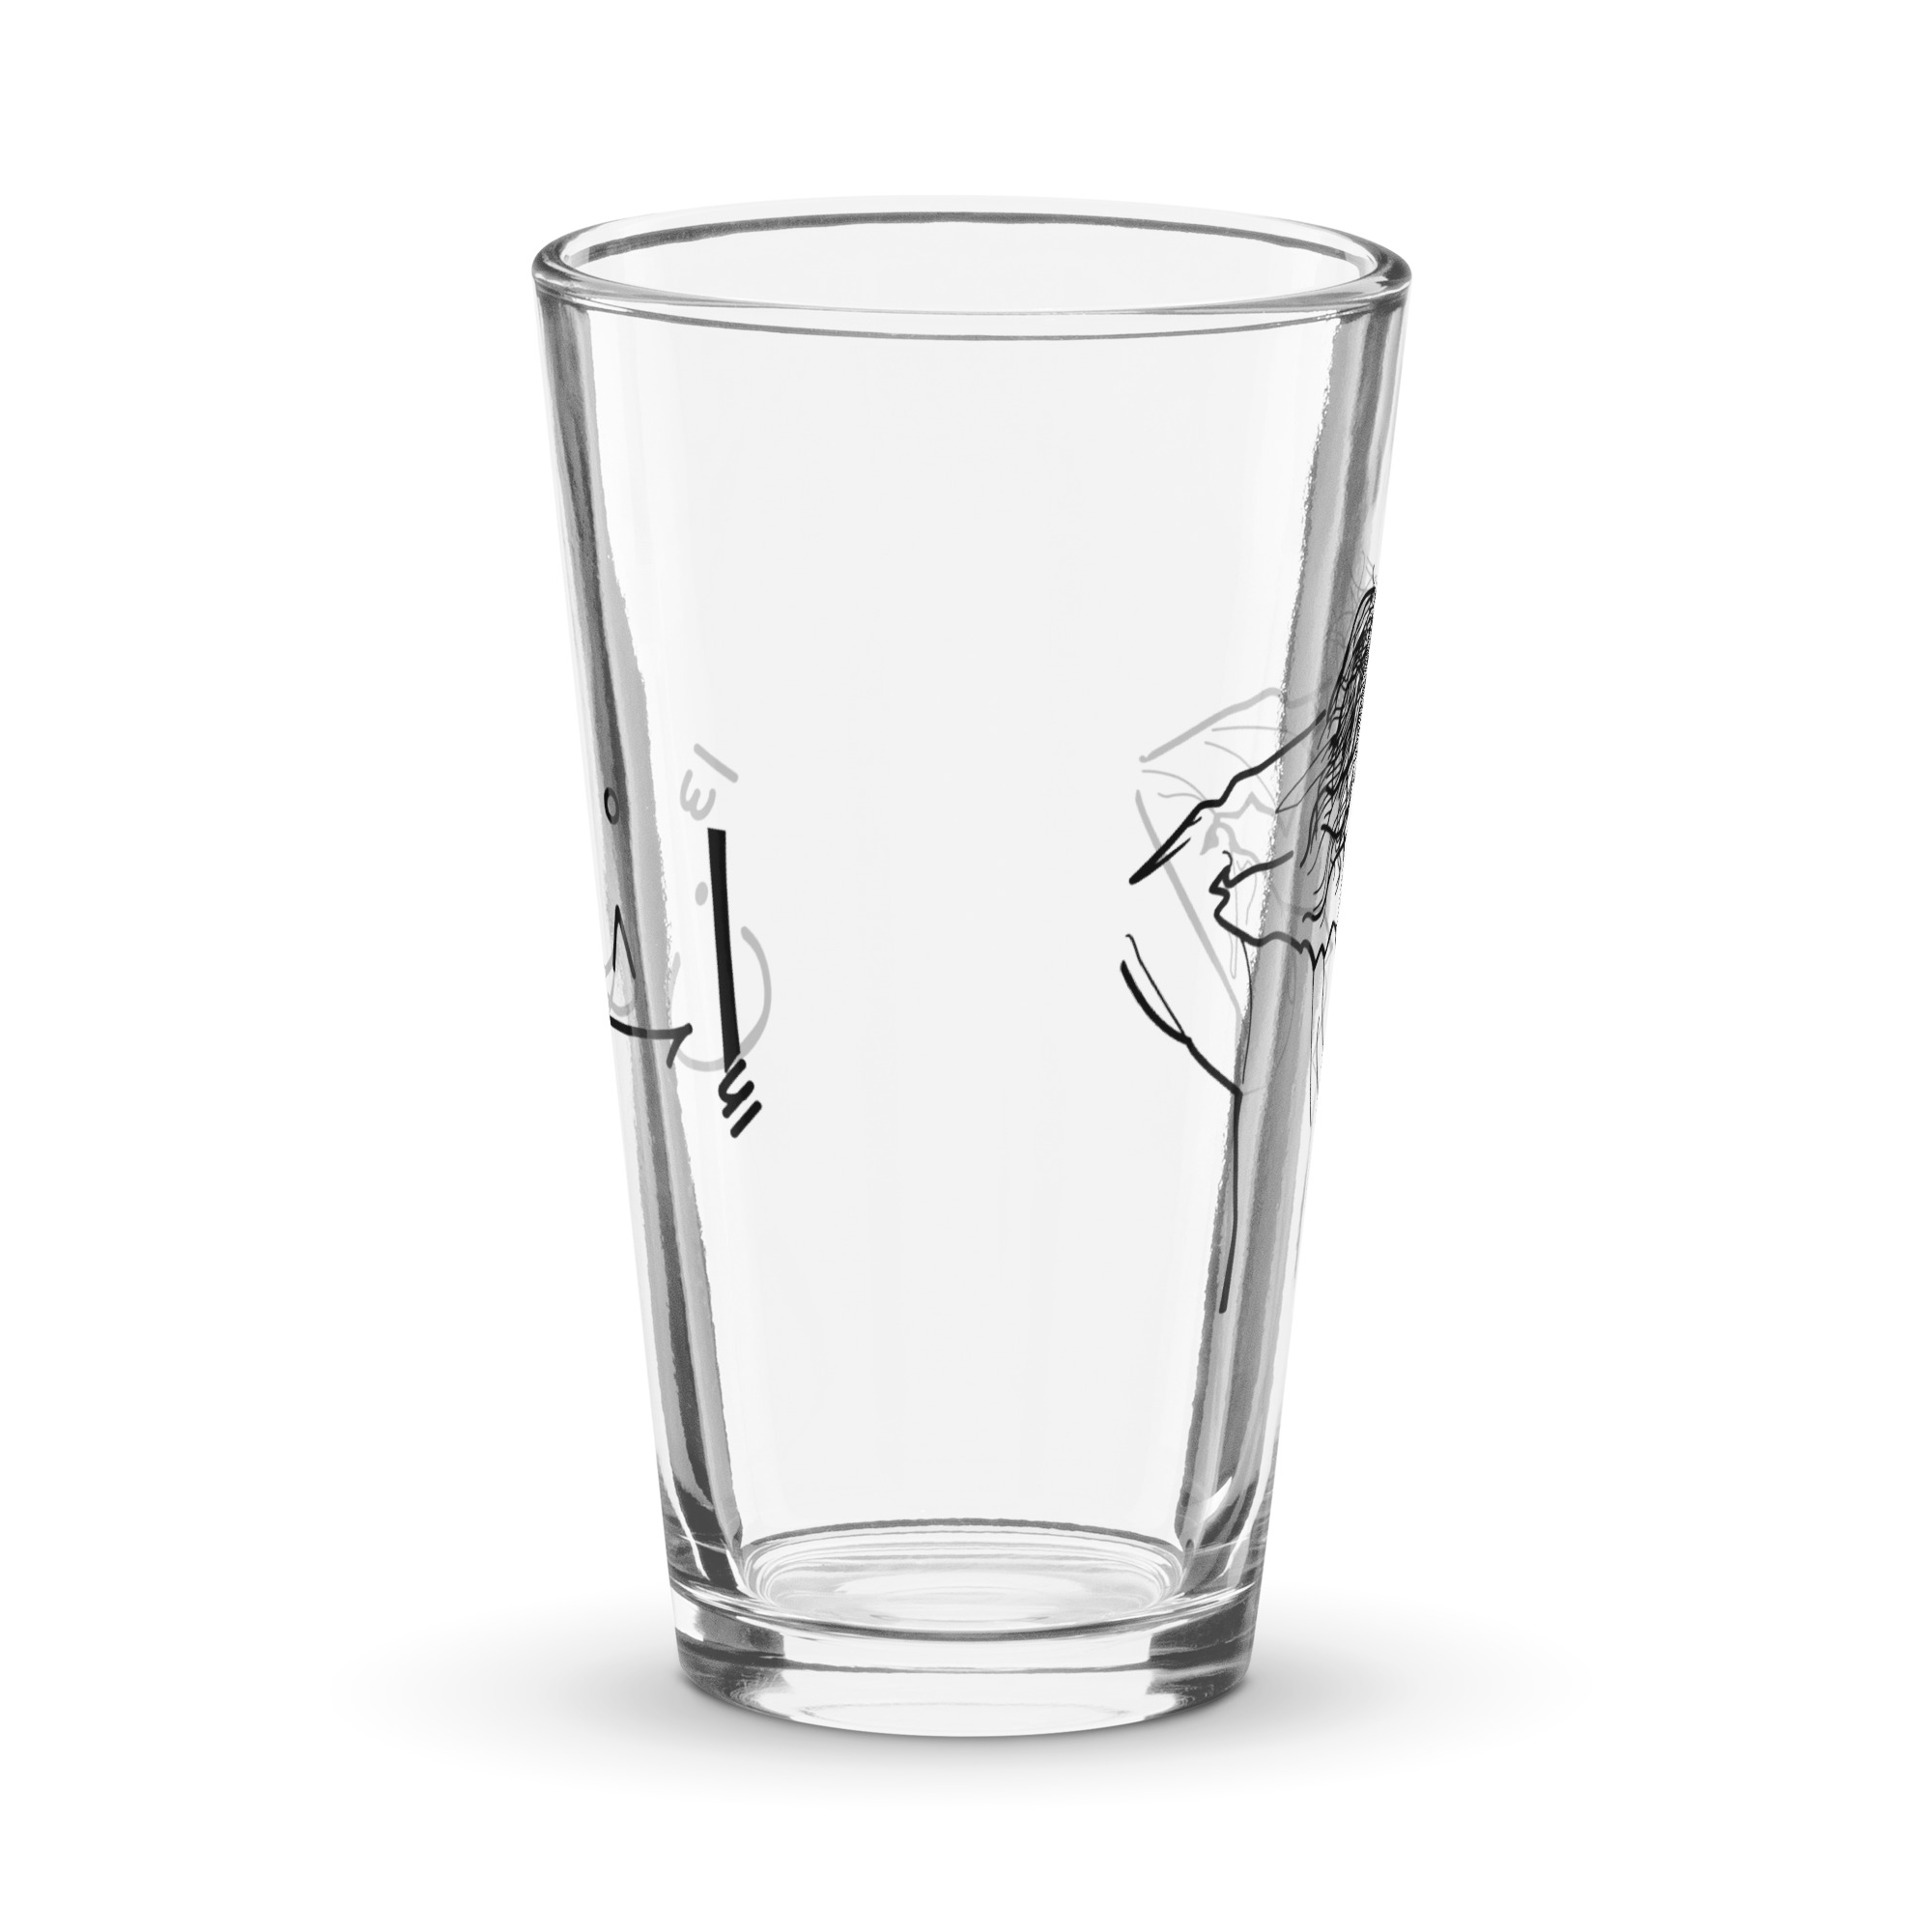 shaker-pint-glass-16-oz-16-oz-front-640b83468d5f9.jpg